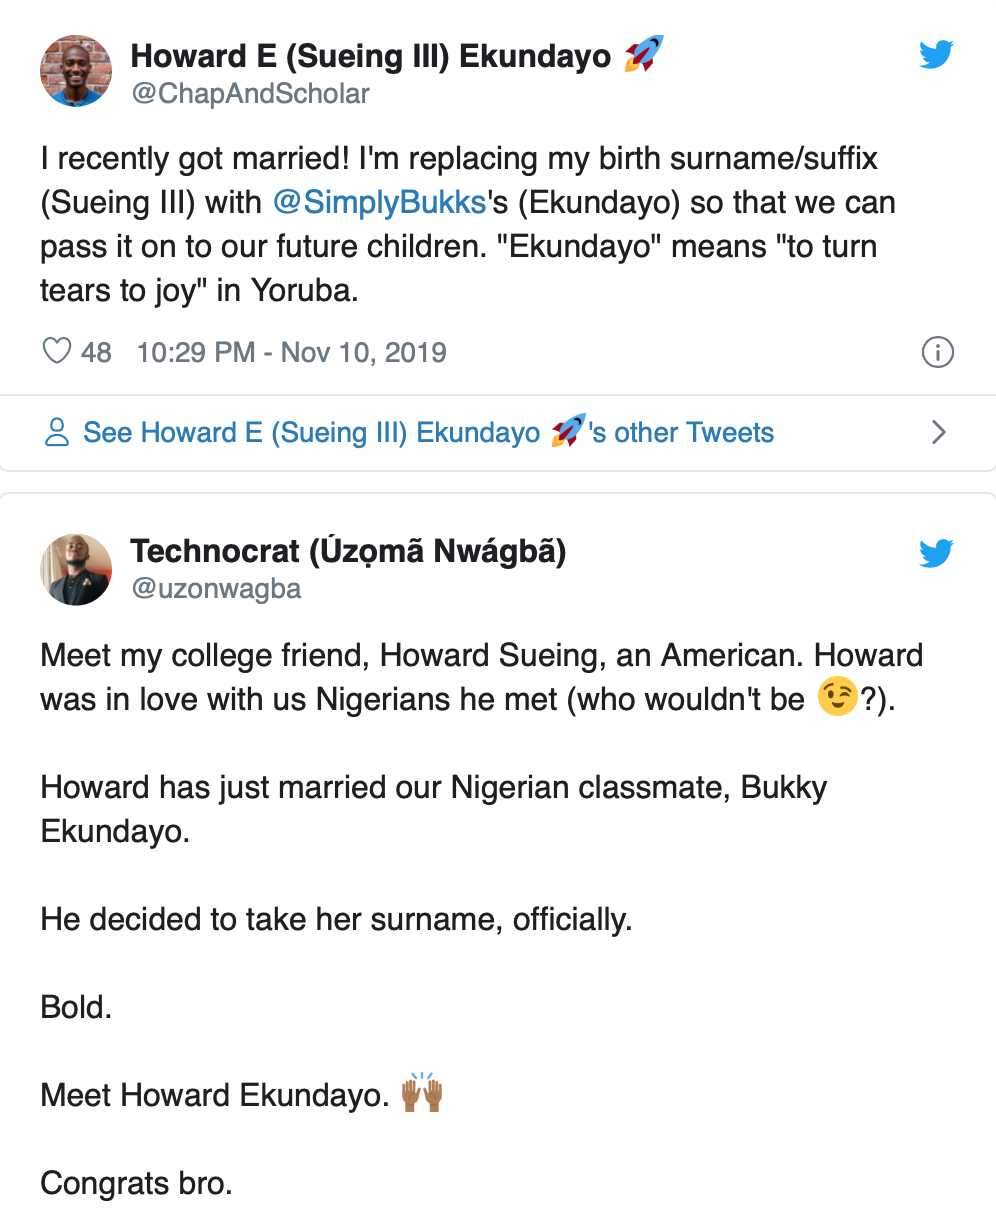 American Man Adopts Nigerian Wife's Surname (Photo)